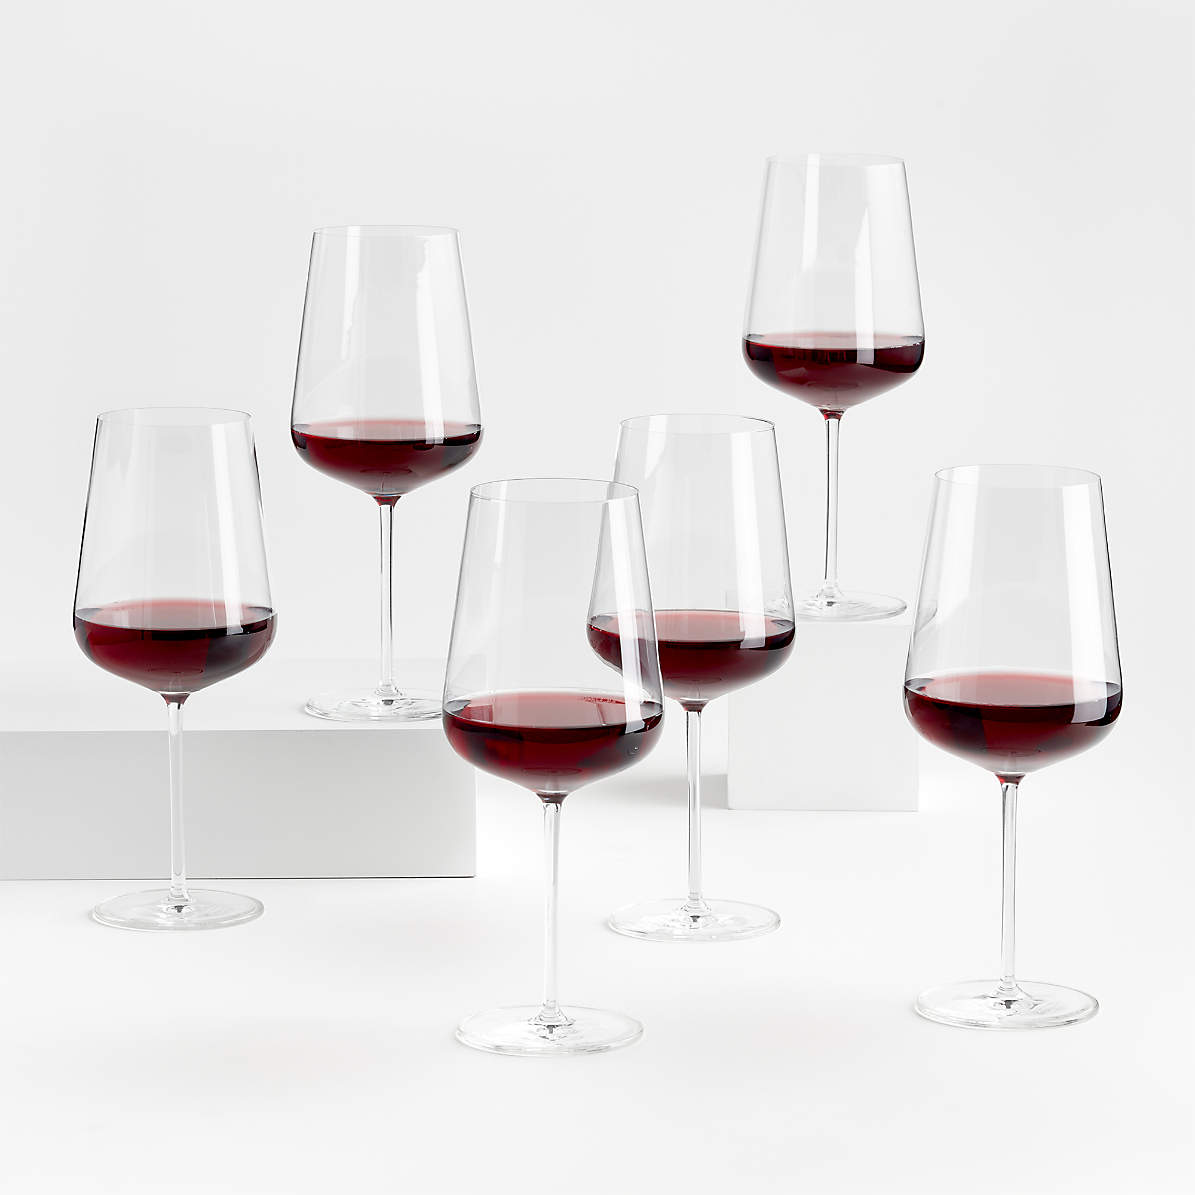 https://cb.scene7.com/is/image/Crate/VervinoRedWineGlsS6SSF20/$web_pdp_main_carousel_zoom_med$/201211165258/vervino-red-wine-glasses-set-of-6.jpg